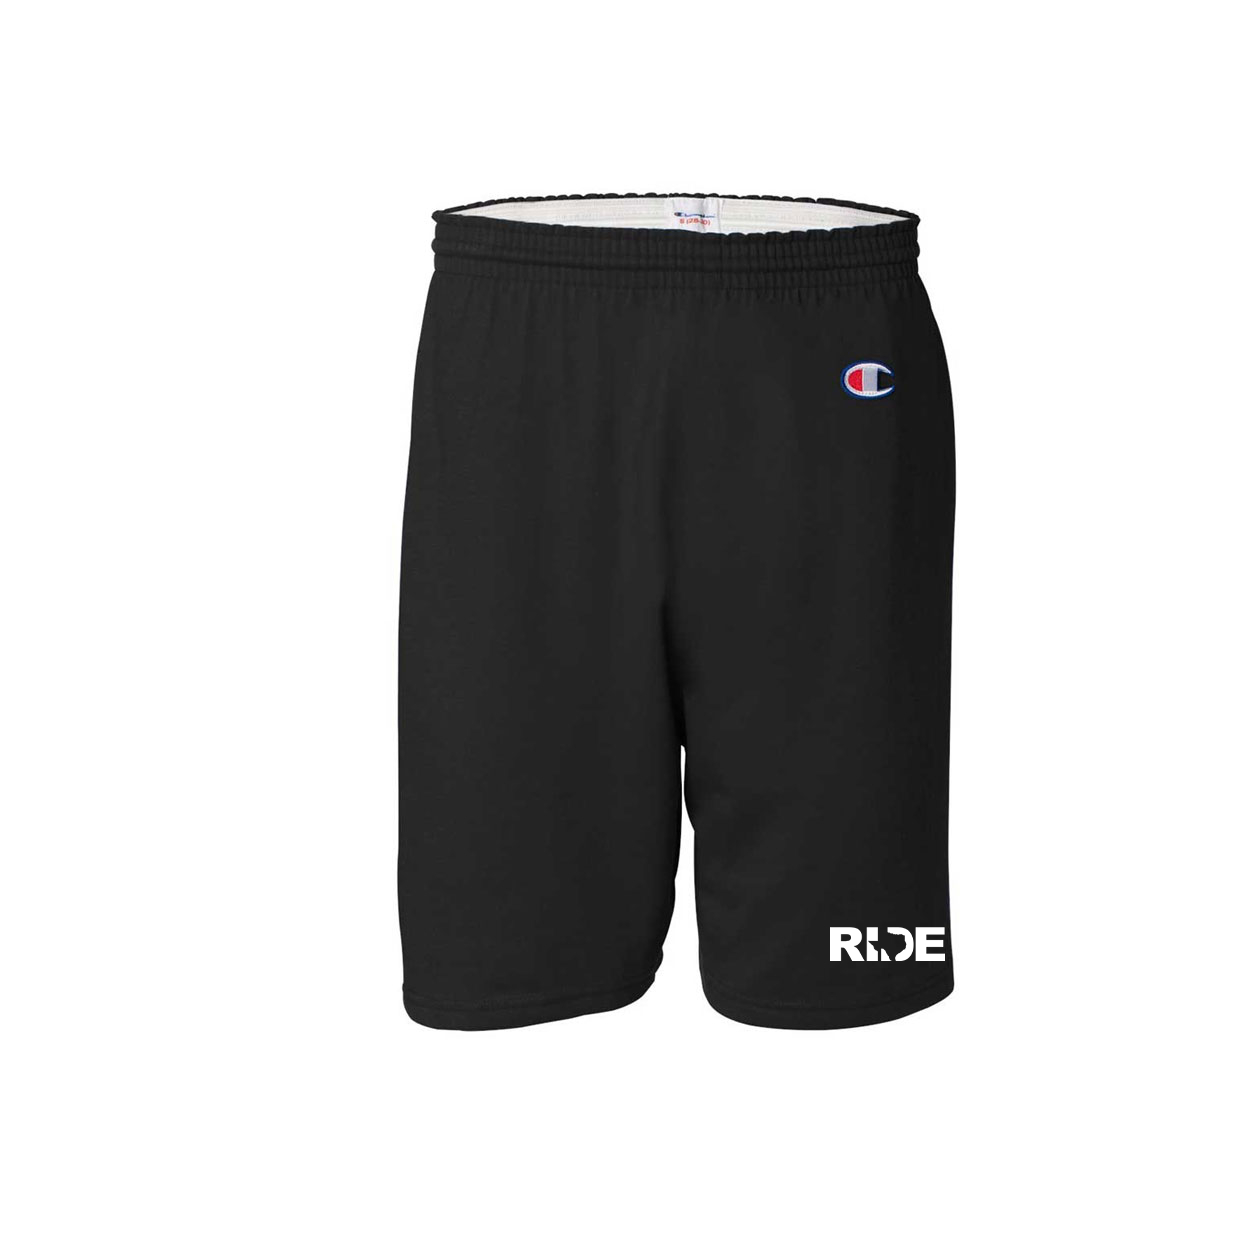 Ride Texas Classic Men's Unisex Gym Shorts Black with Pockets Black (White Logo)